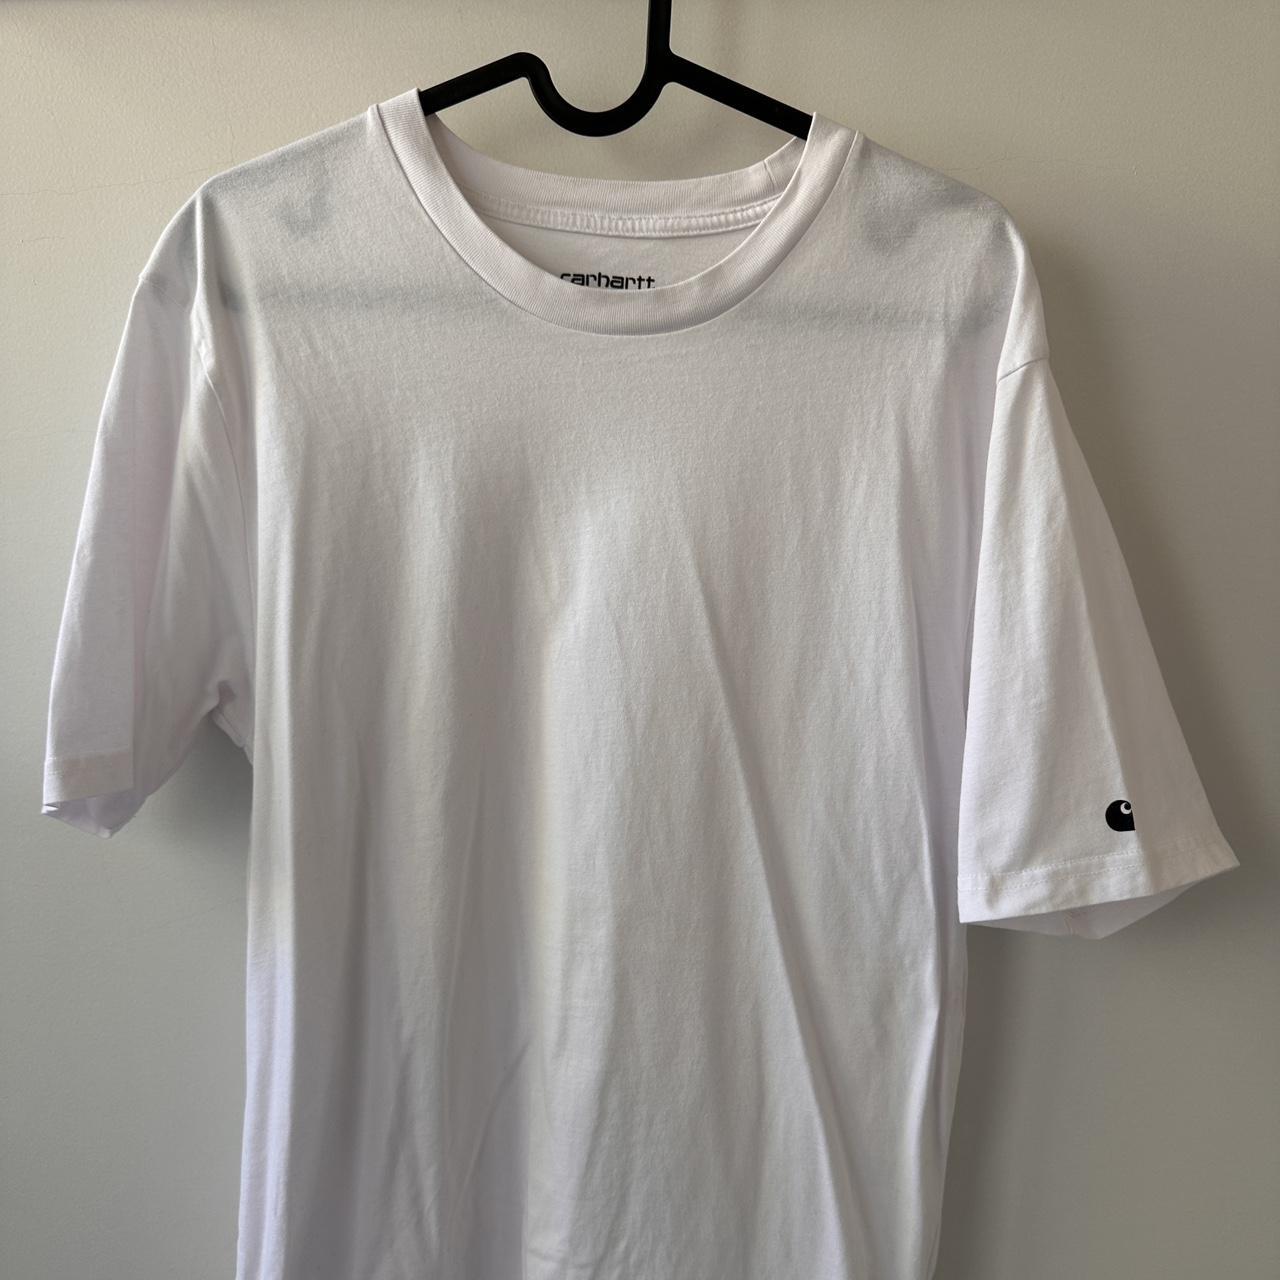 Carhartt WIP t shirt White - size large Logo on... - Depop